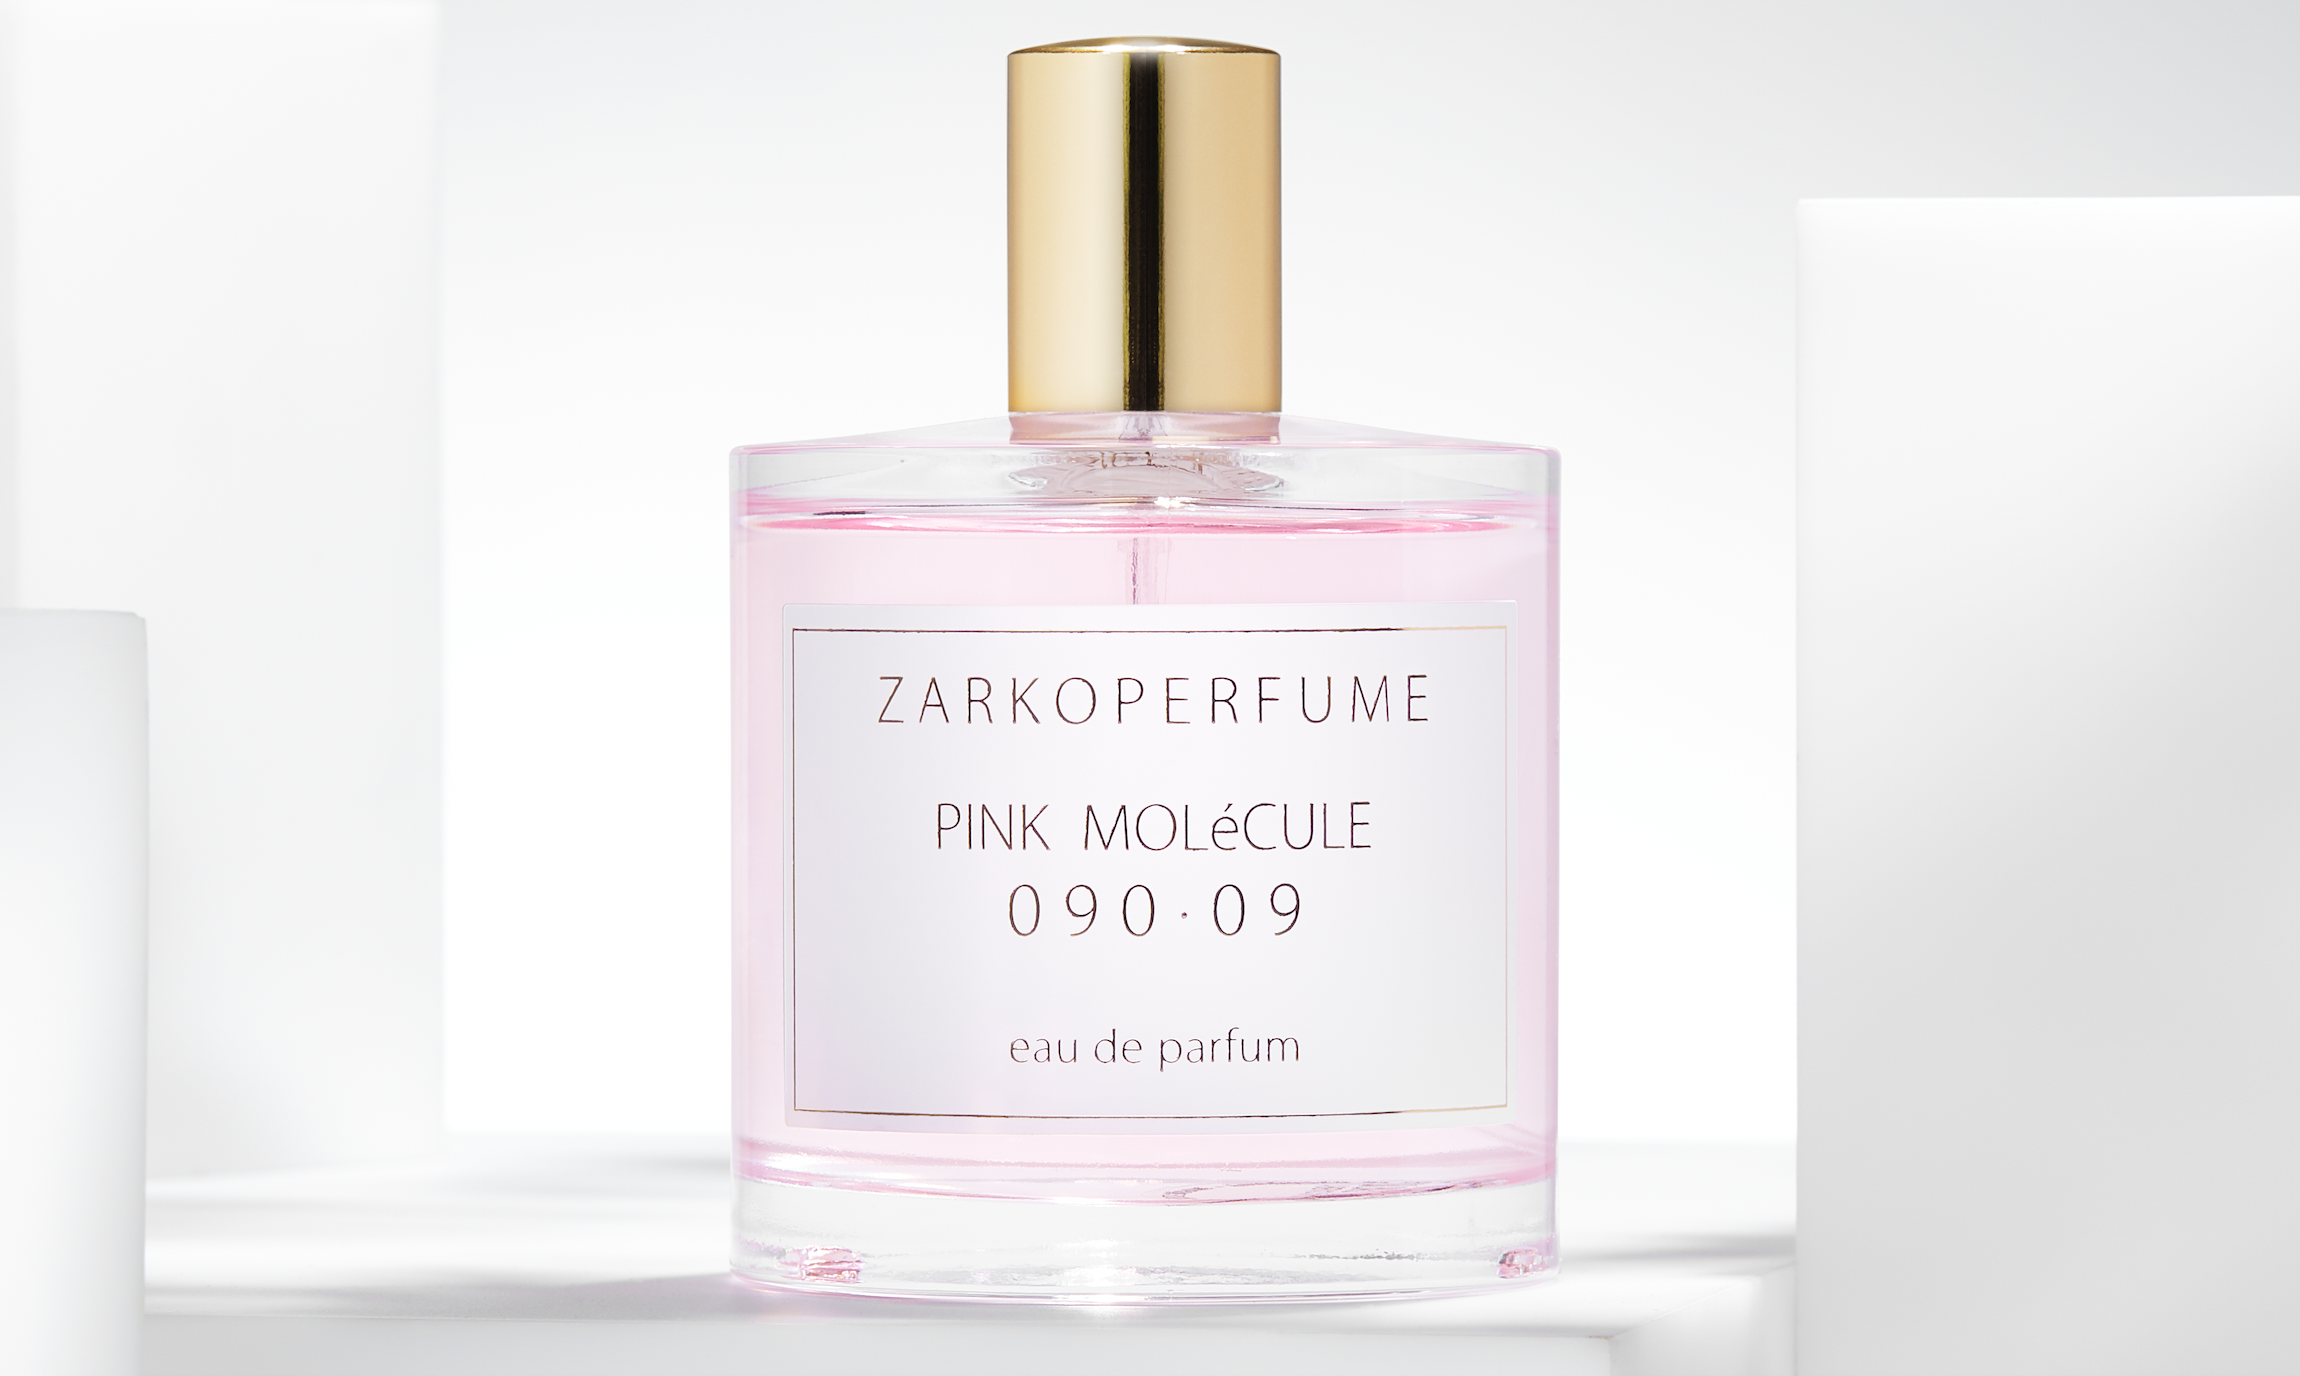 Zarkoperfume, Pink MoléCule, molekyleduft, parfume